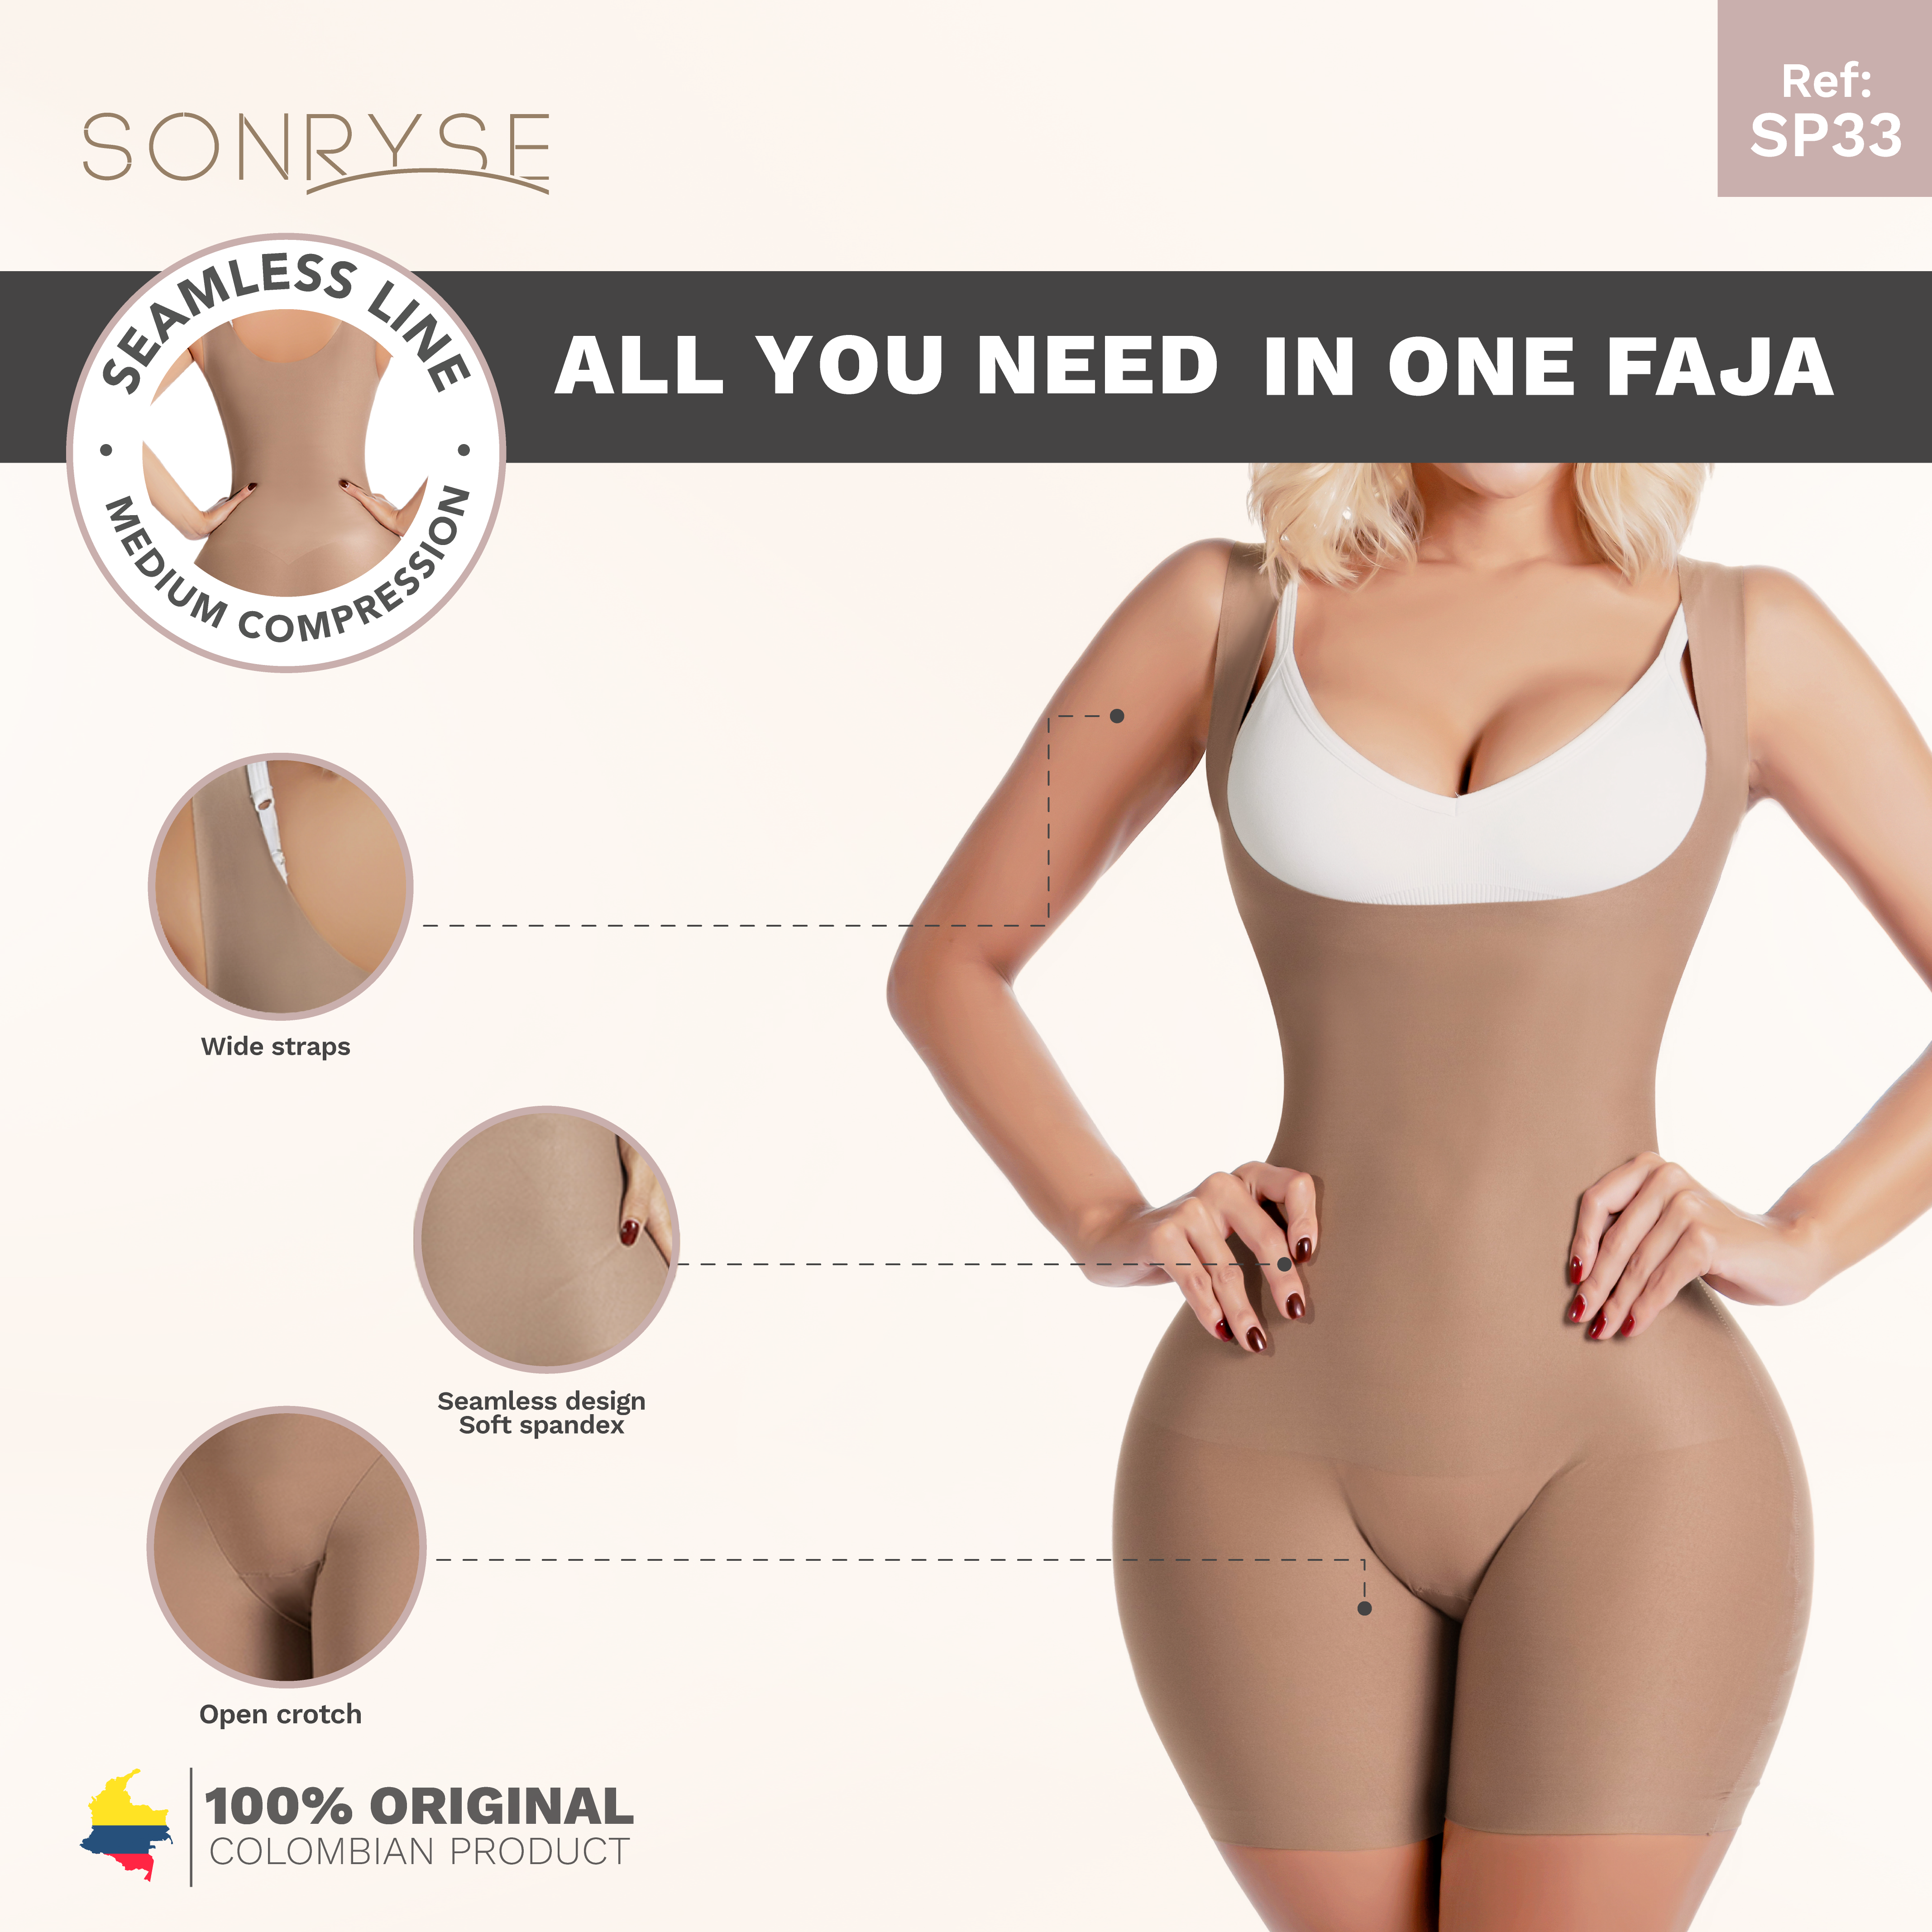 Faja Colombiana Everyday Use Bodysuit Shapewear for Women Sonryse SP33 –  Fajas Colombianas Shop